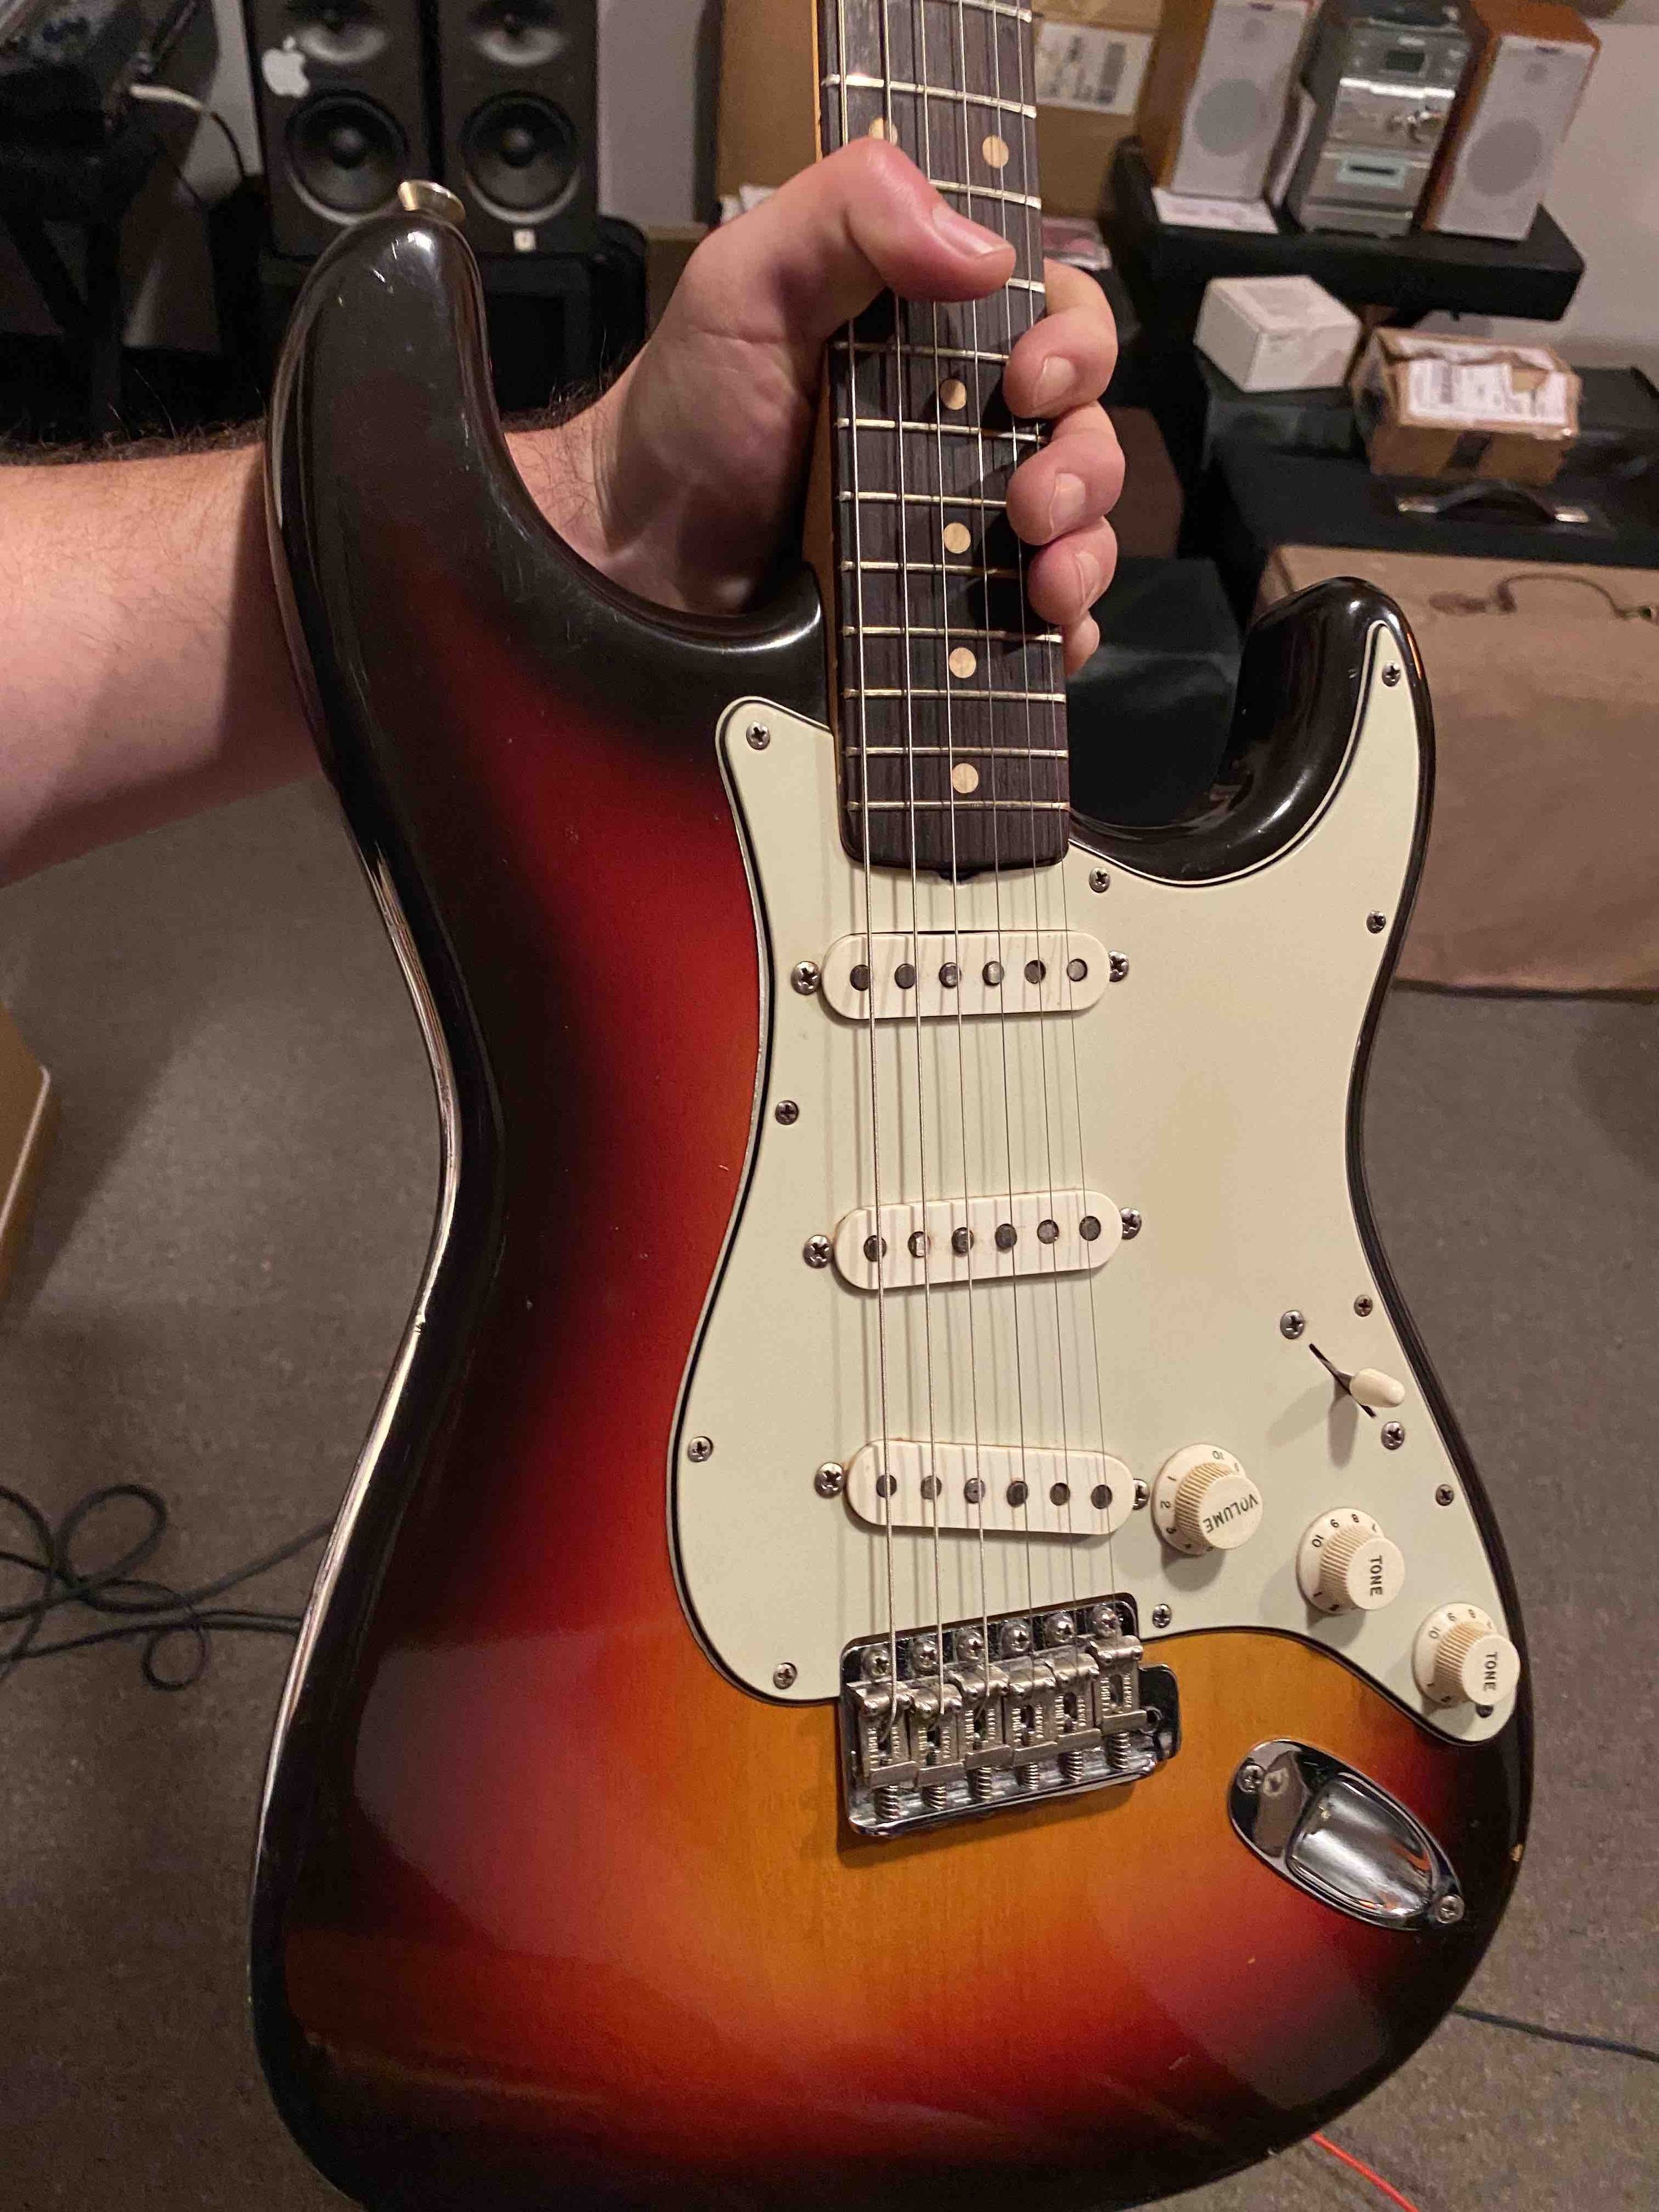 1961 Fender Stratocaster for Sale — Guitars